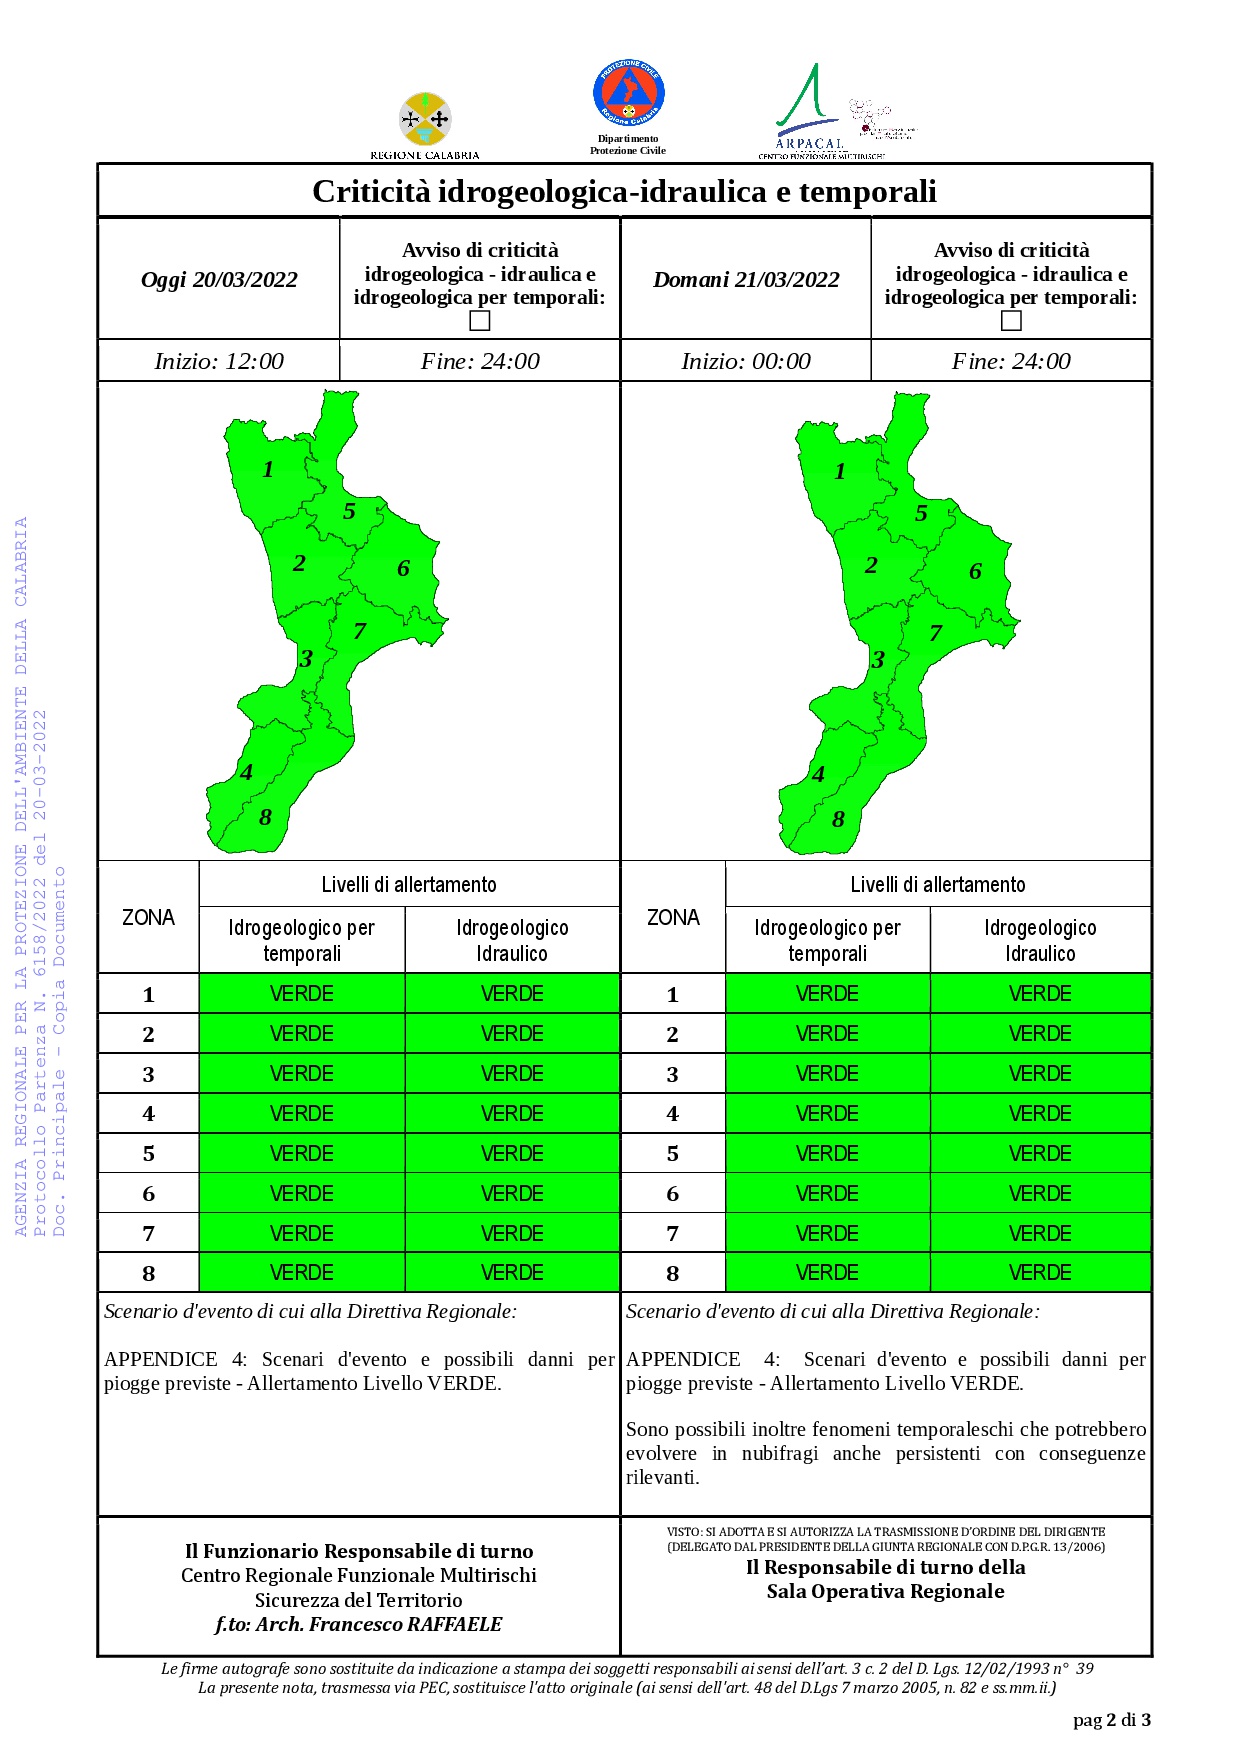 Criticità idrogeologica-idraulica e temporali in Calabria 20-03-2022